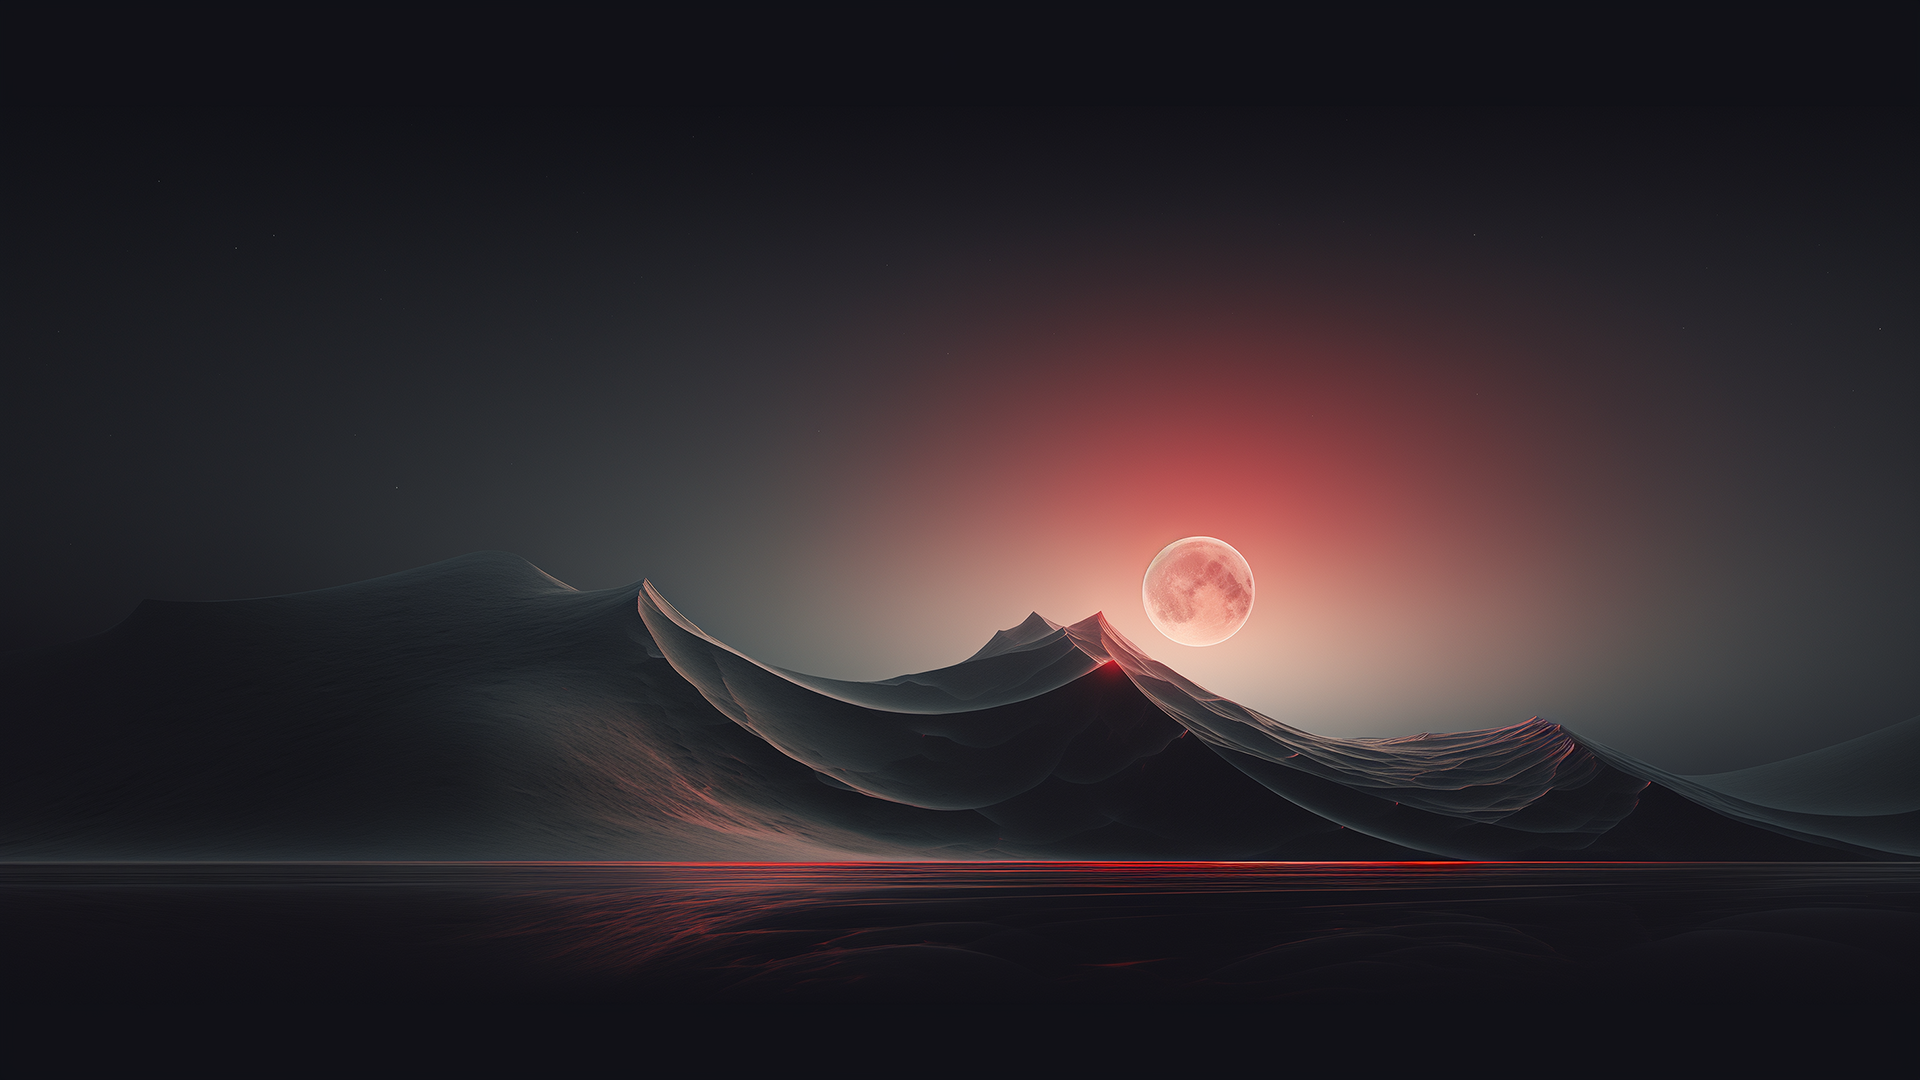 General 1920x1080 Moon red dark planet landscape mountains AI art digital art moonlight simple background sky minimalism